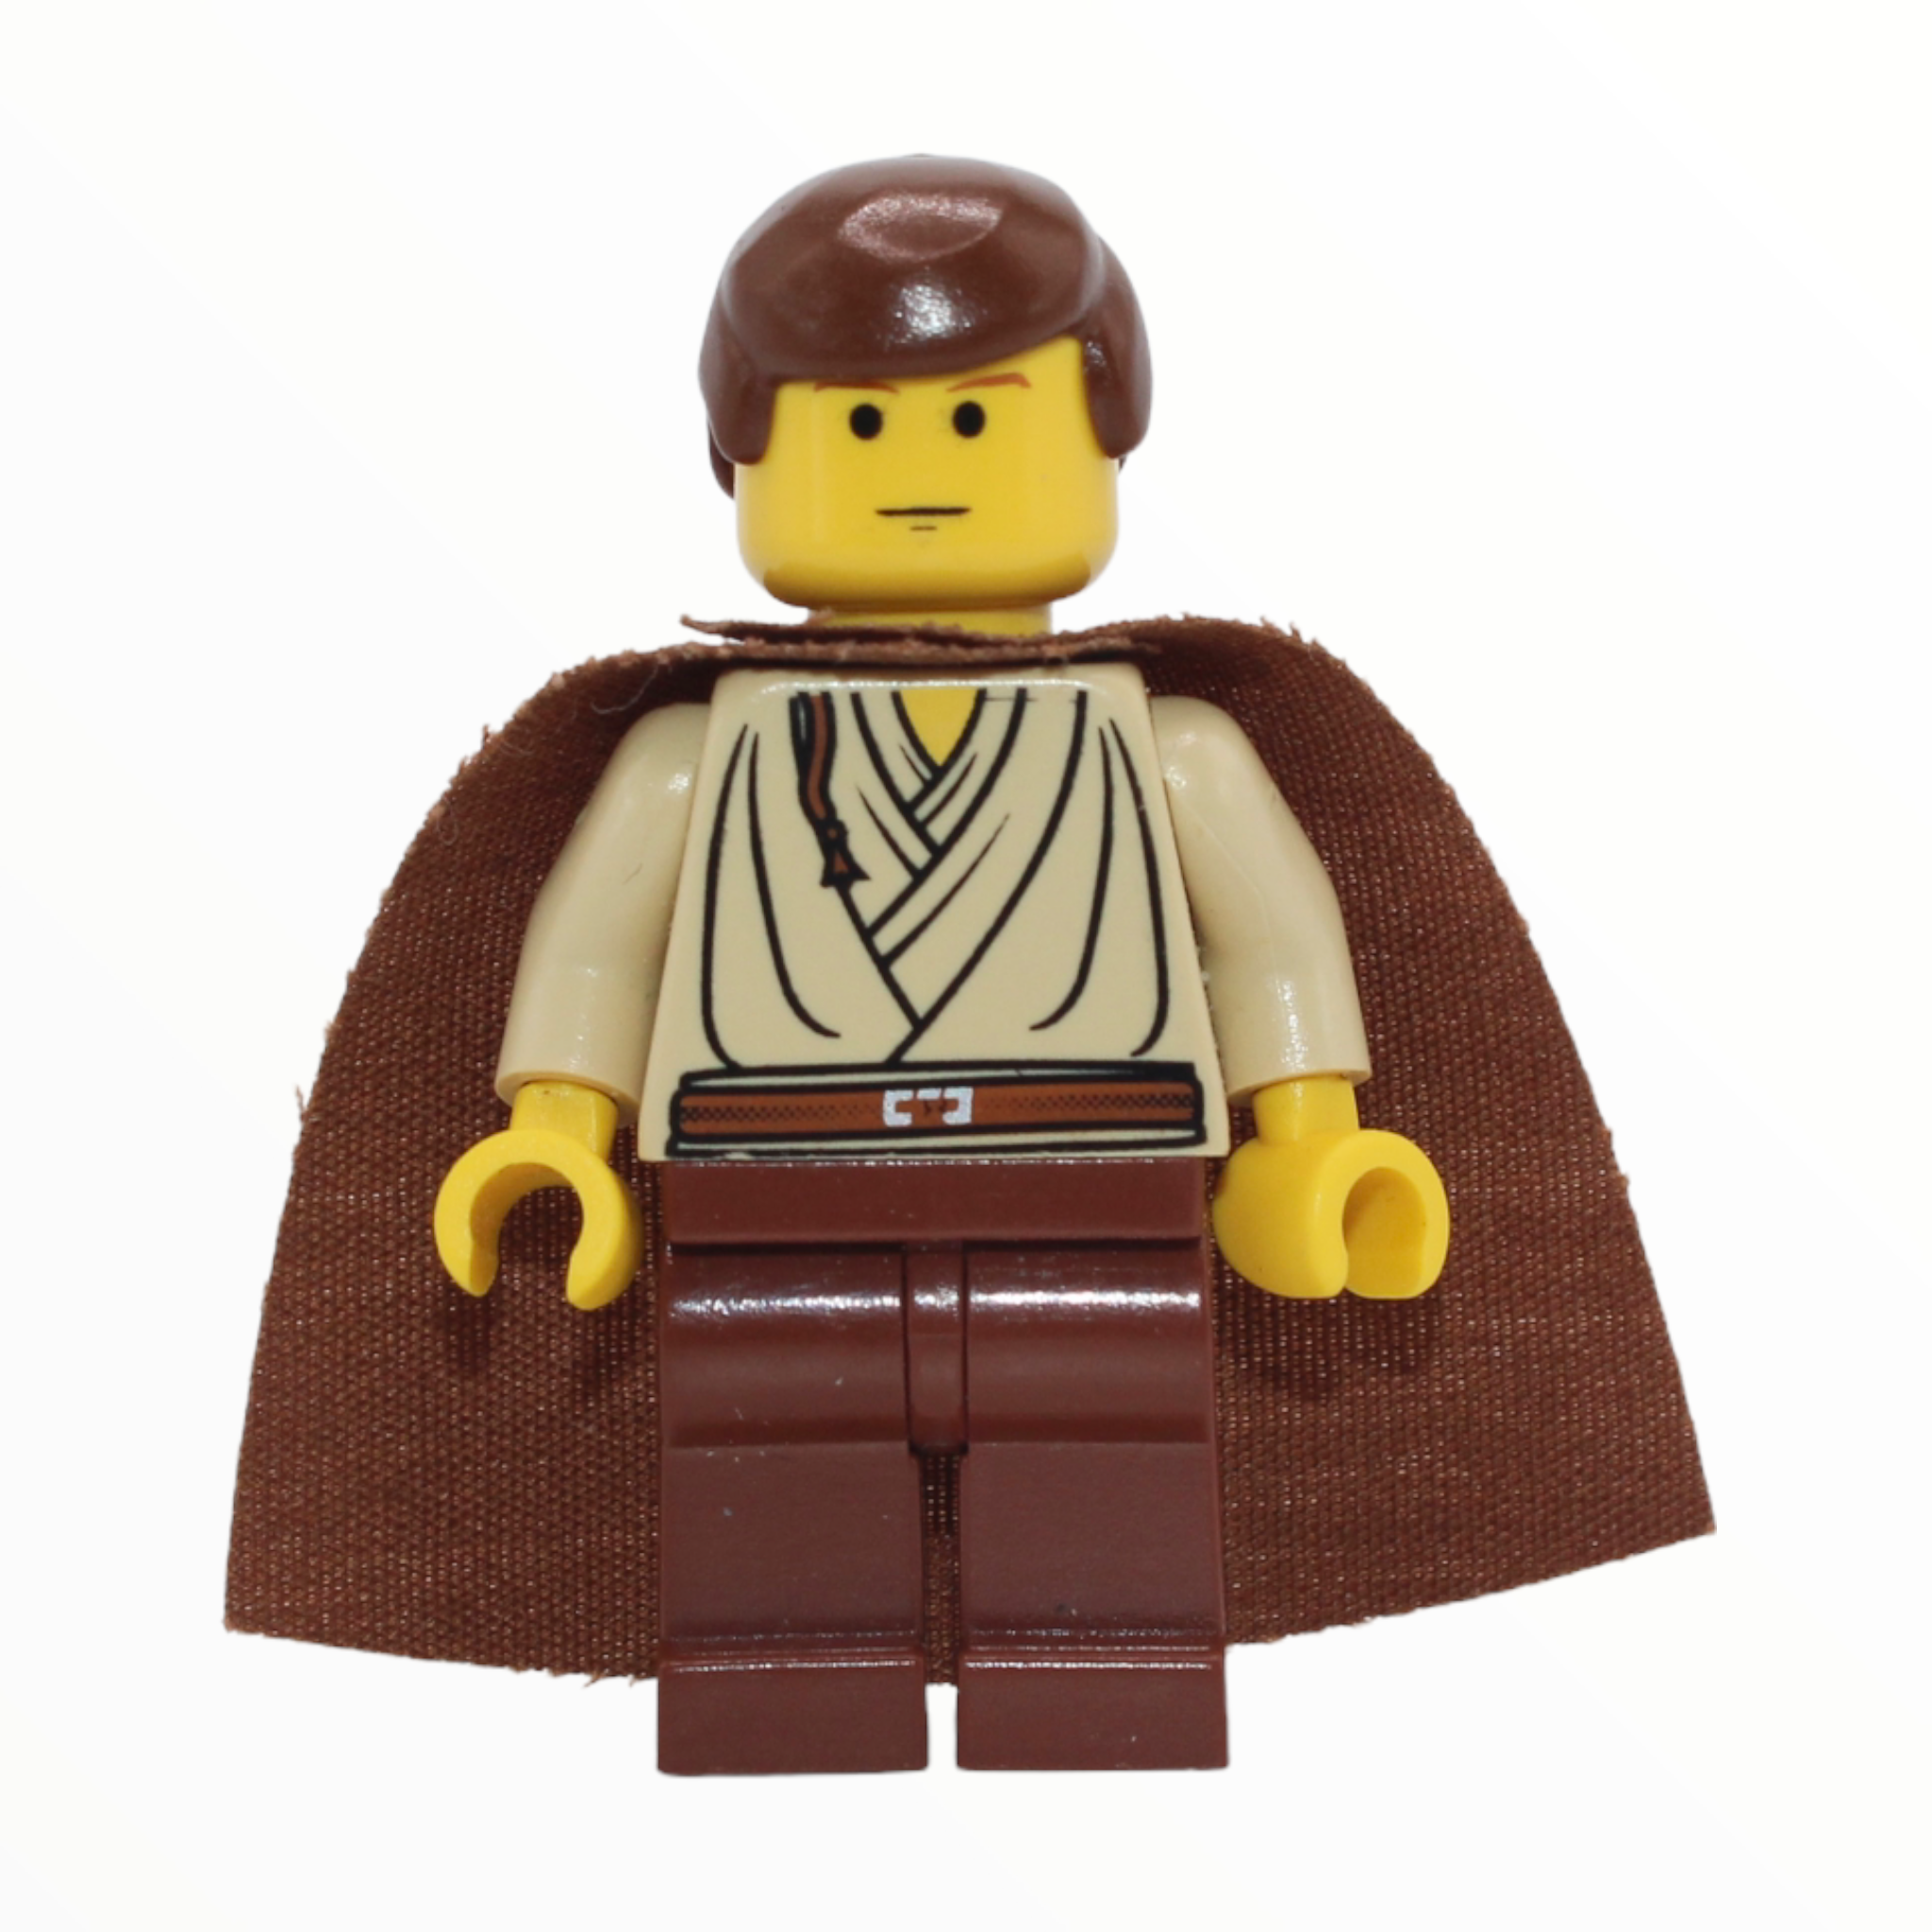 Obi-Wan Kenobi (Padawan, yellow skin, cape)